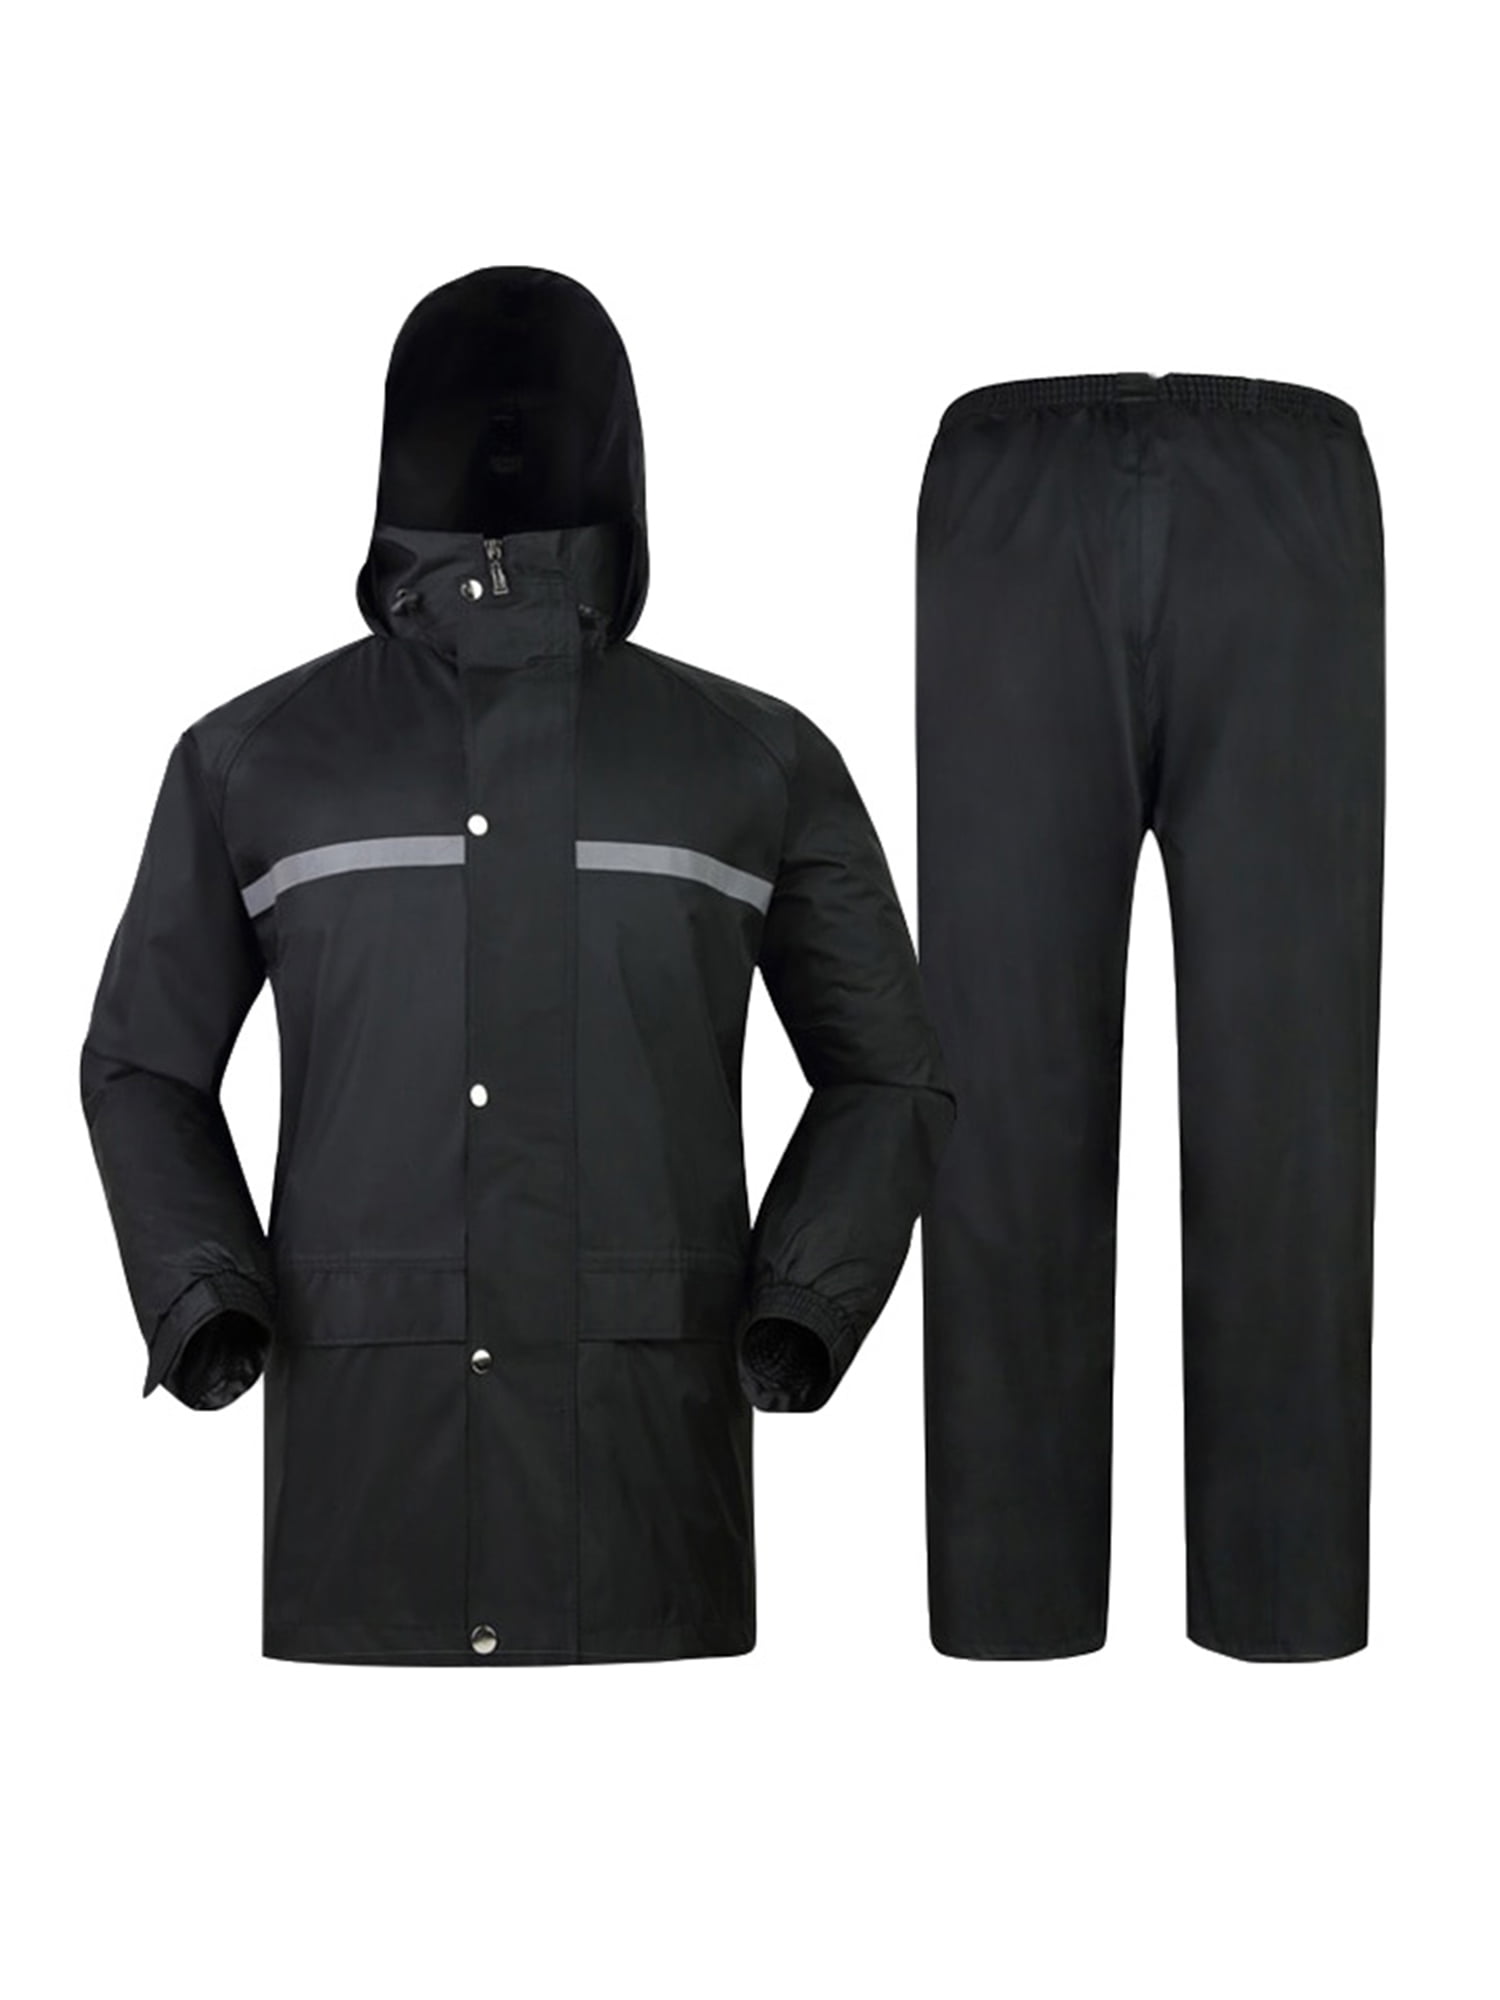 Rain Suits for Men Waterproof Rain Gear for Work Fishing Rain Coats ...